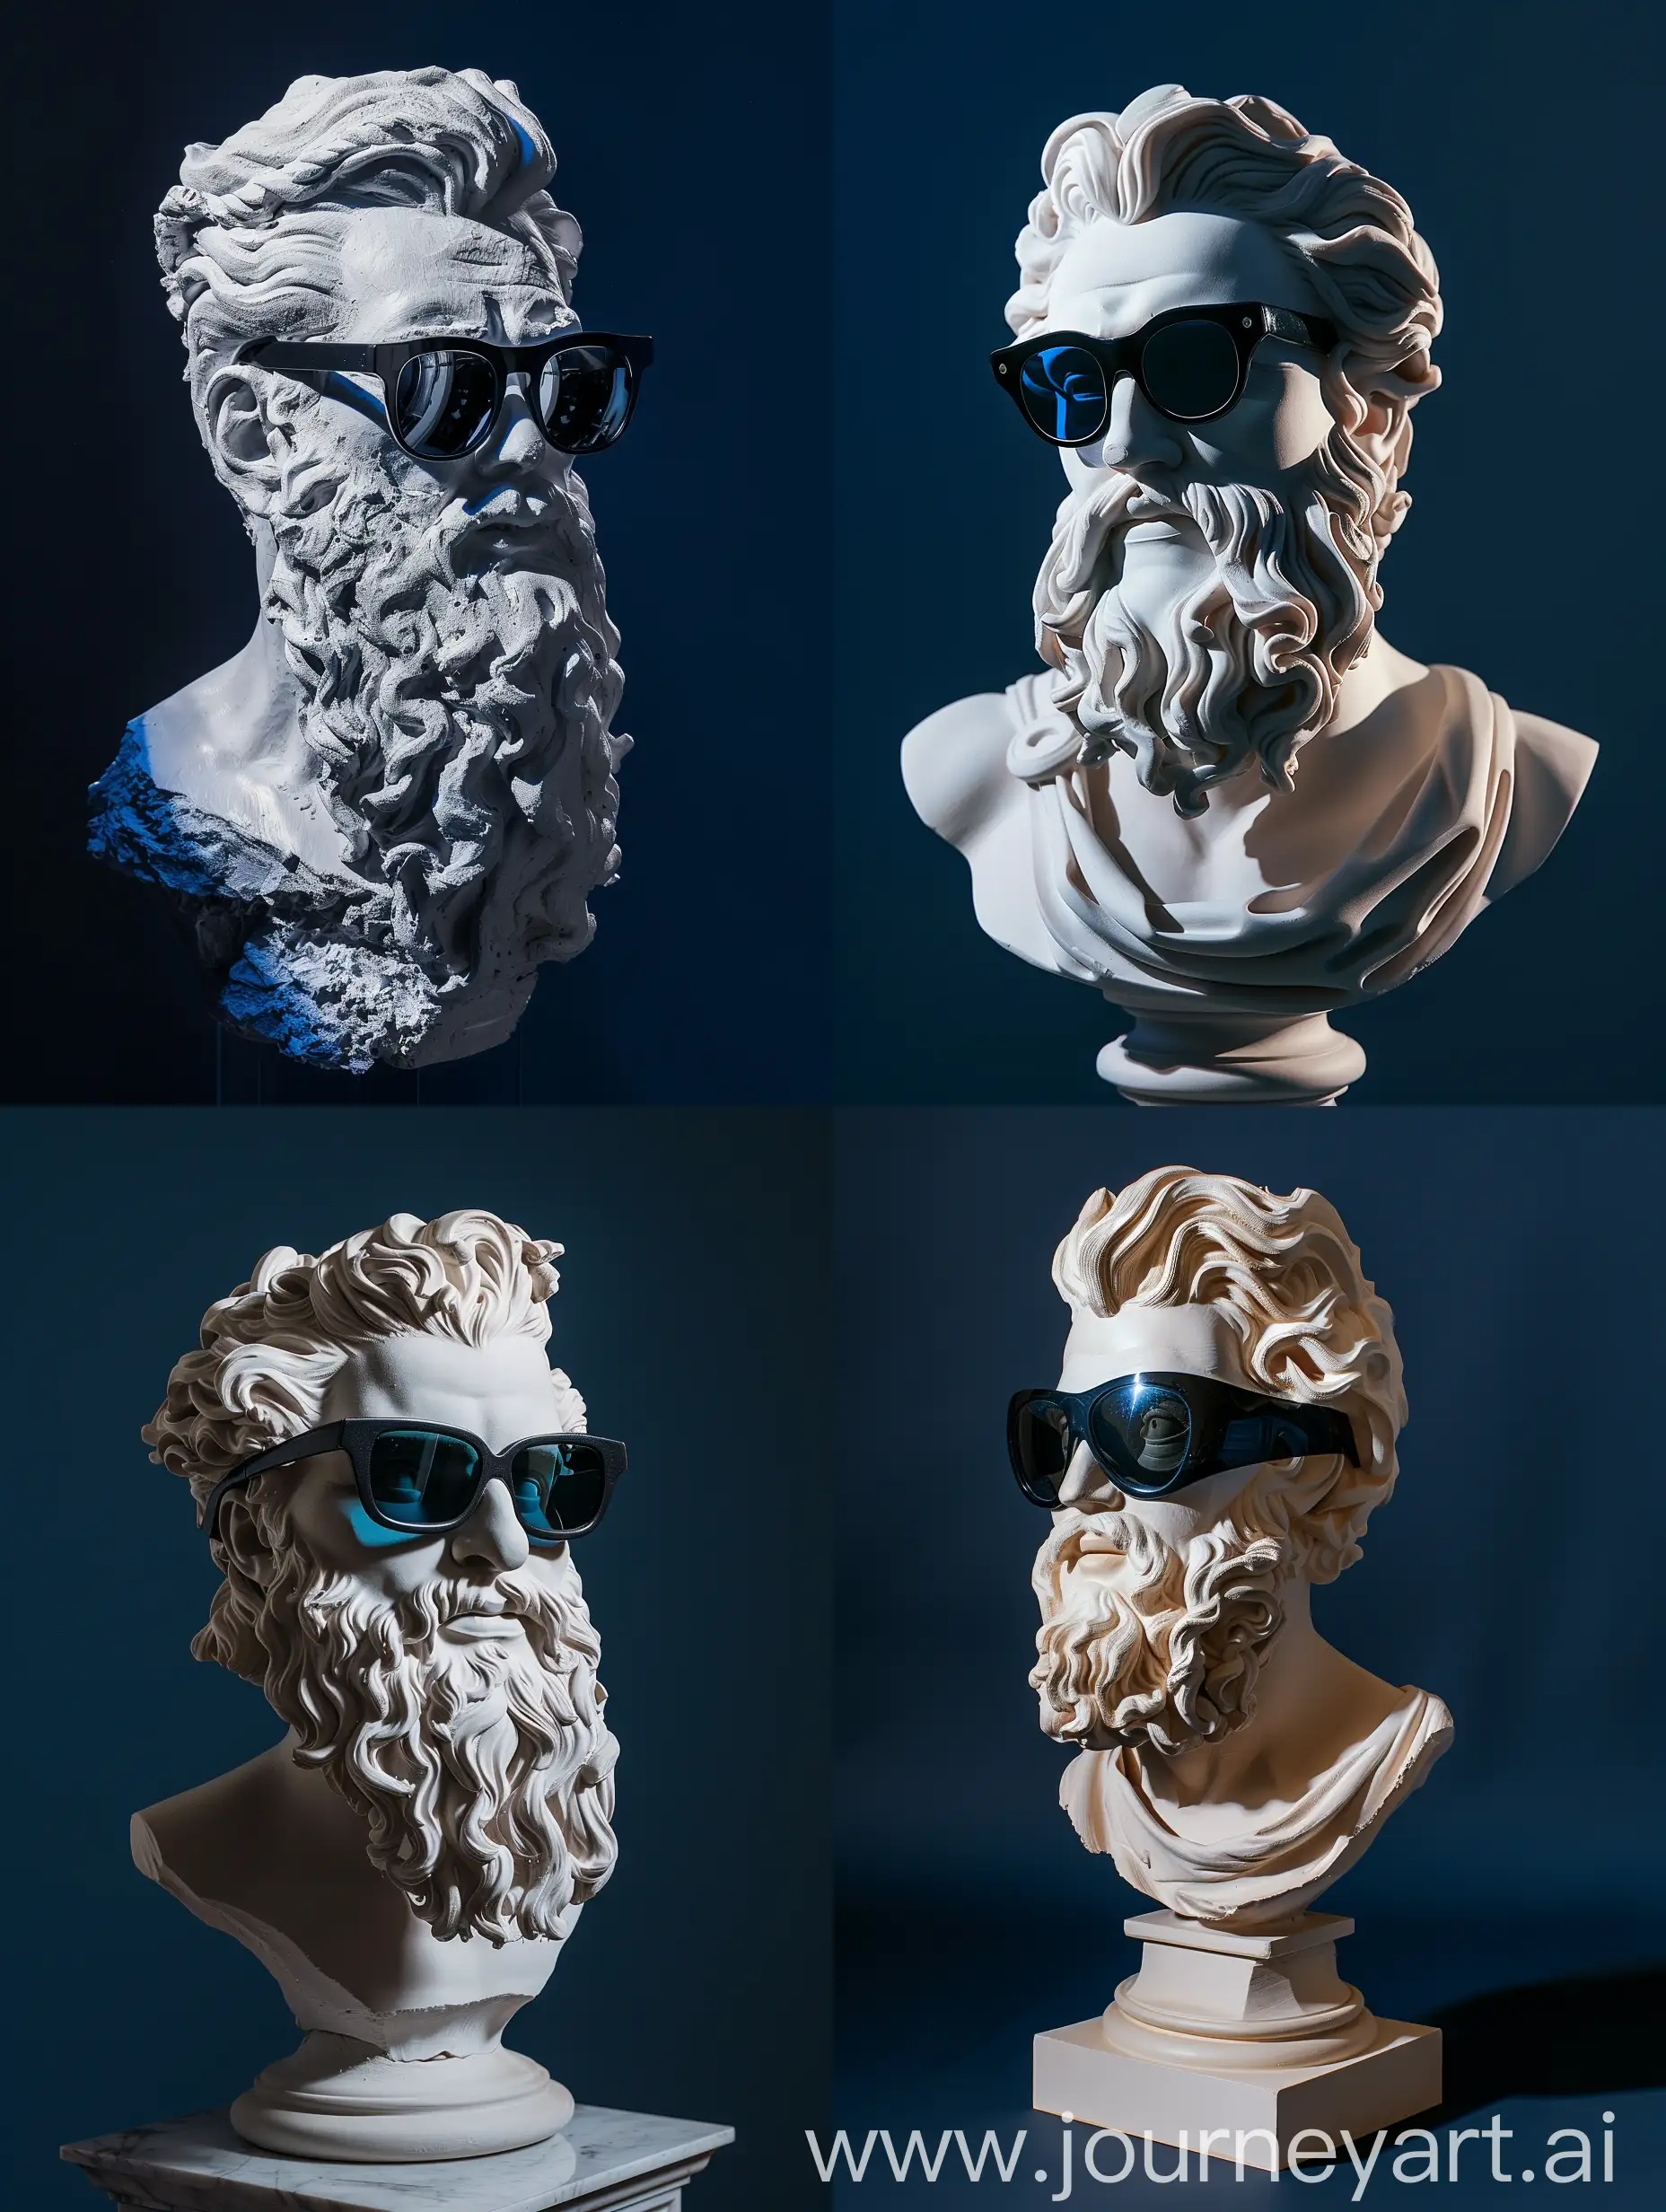 Modern-Zeus-Sculpture-with-Black-Sunglasses-Against-Navy-Blue-Background